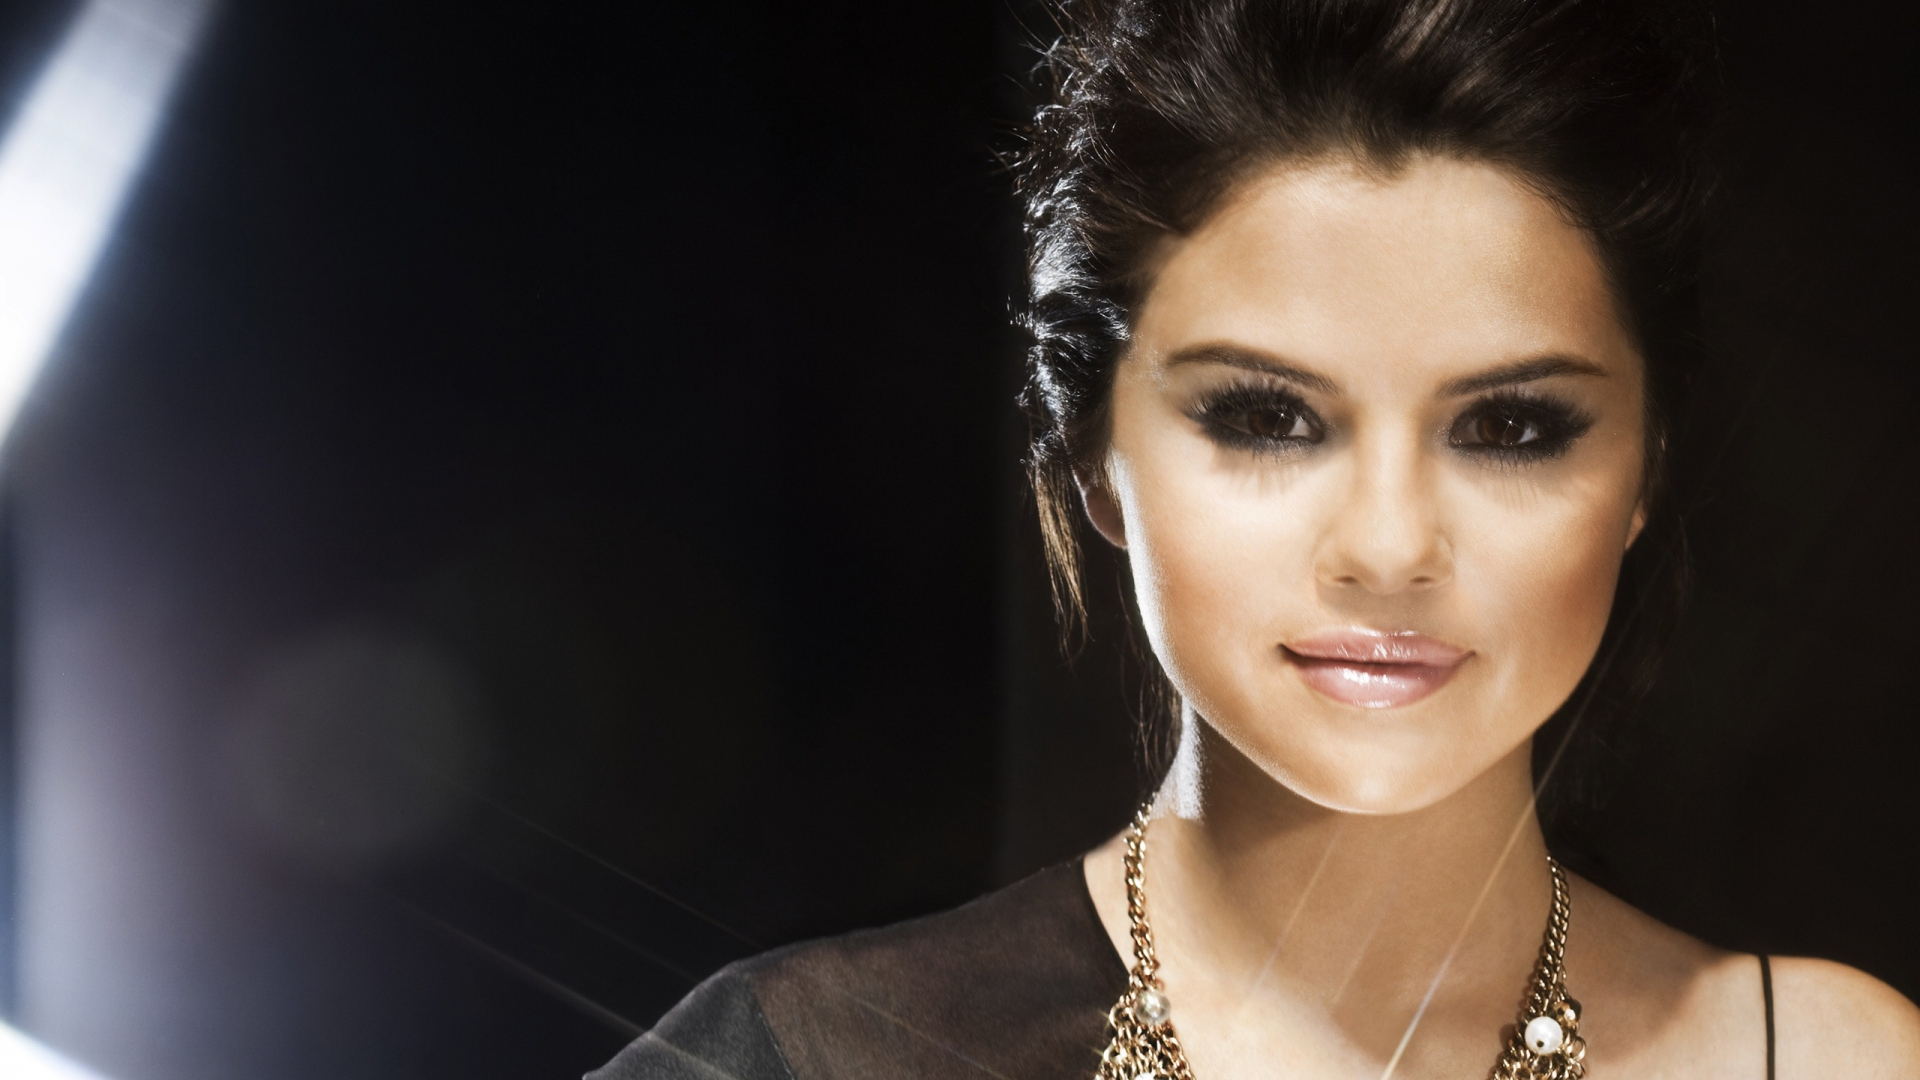 Beautiful Selena Gomez for 1920 x 1080 HDTV 1080p resolution